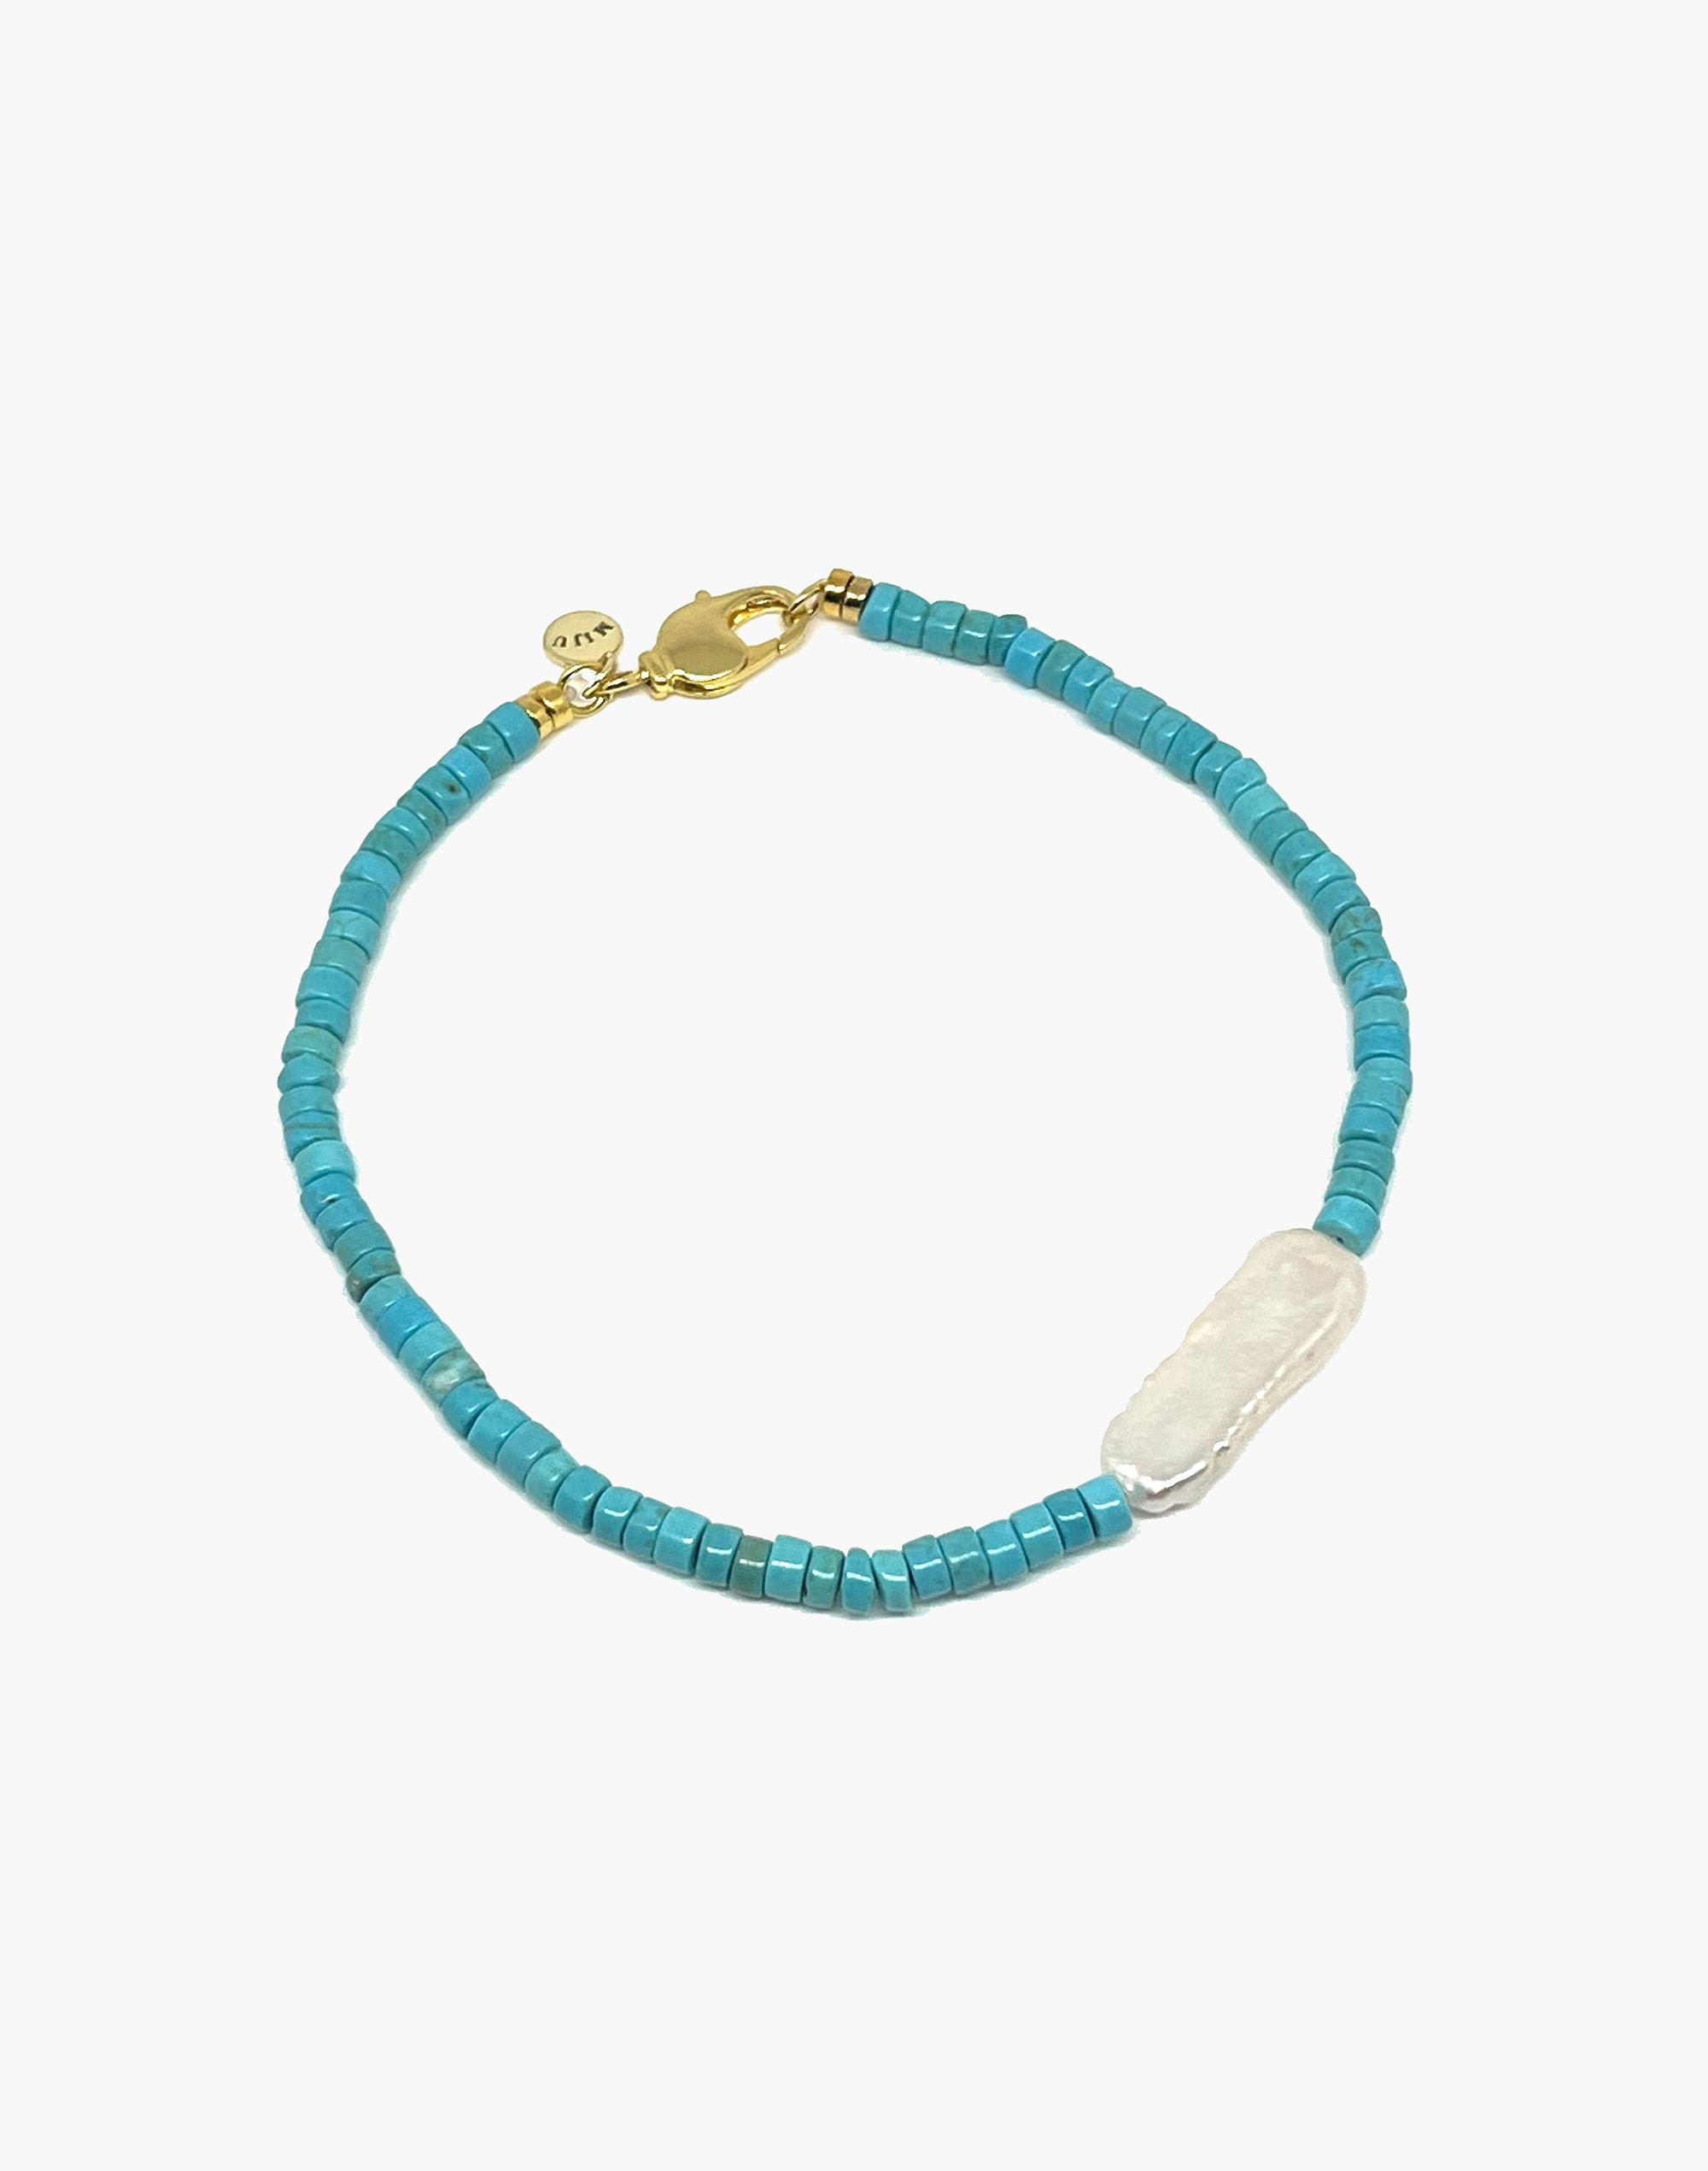 Madewell x MIJU Turquoise Beaded Palma Bracelet